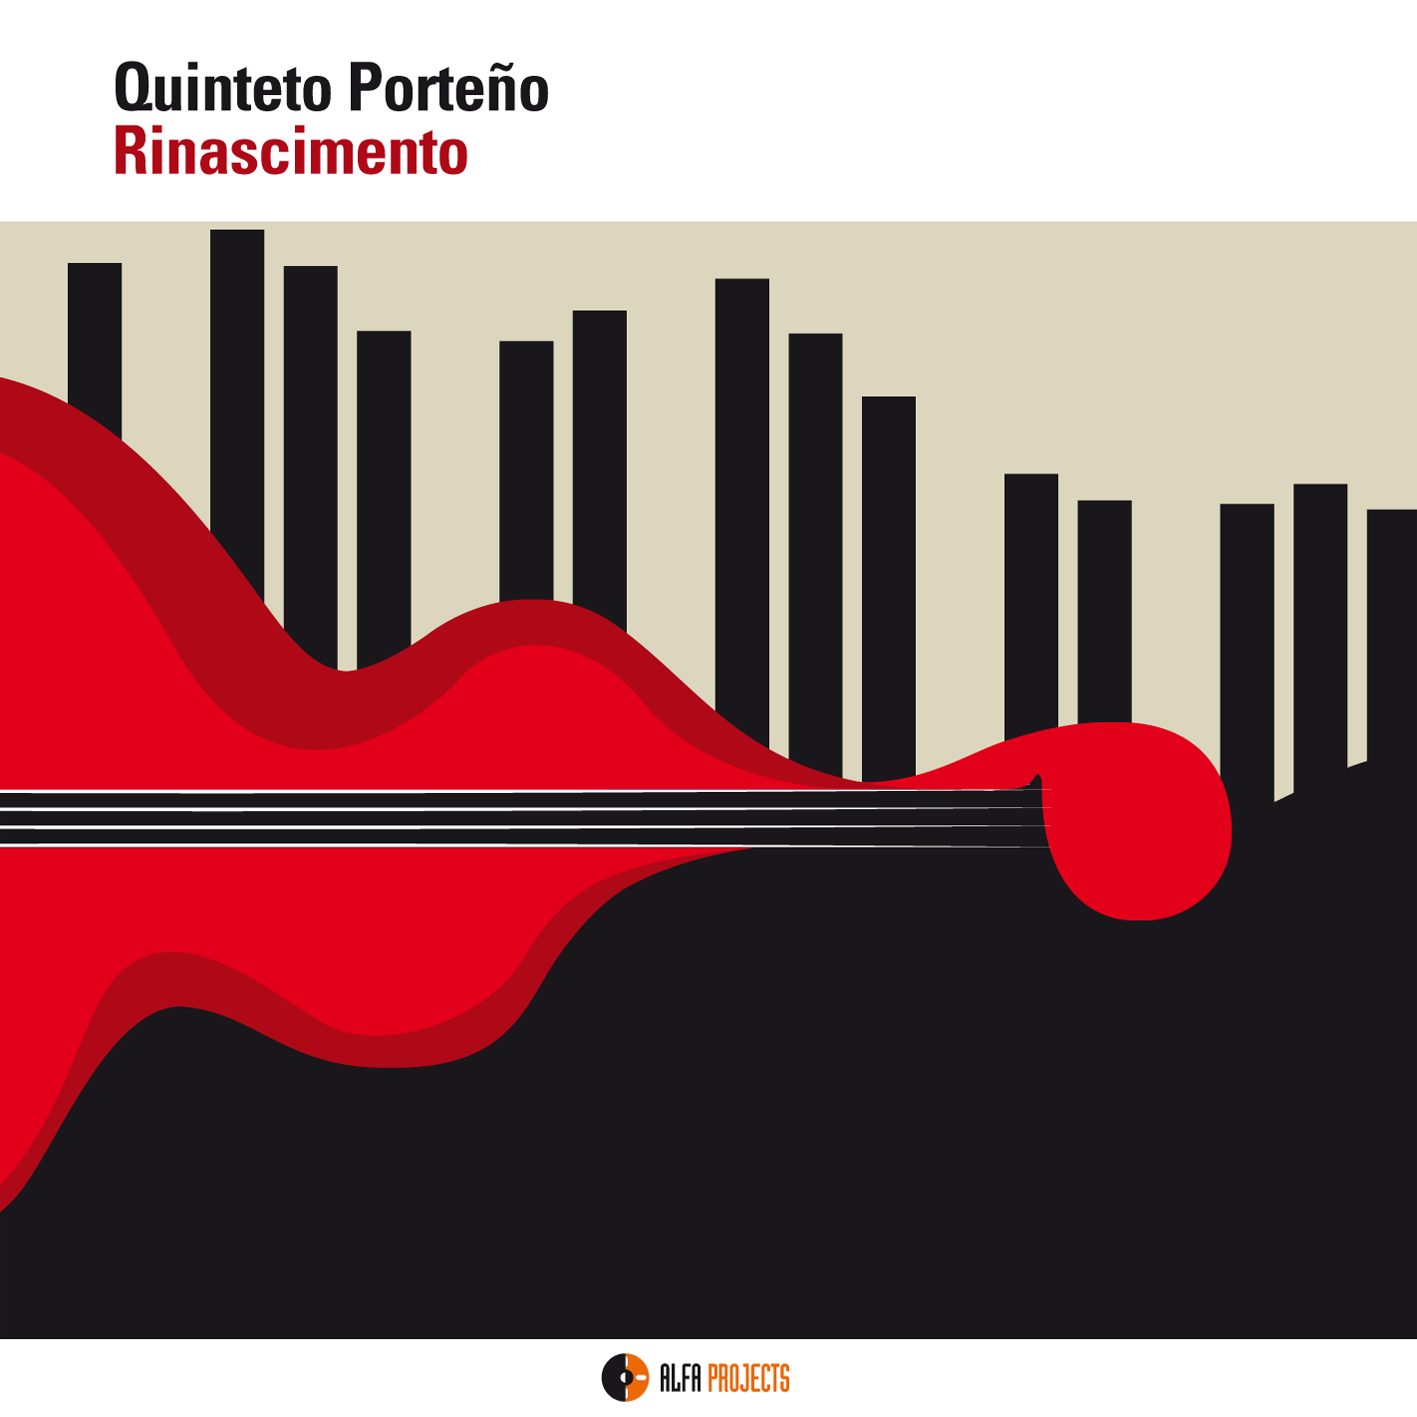 Quinteto Porteño recensione Blogfoolk a Rinascimento